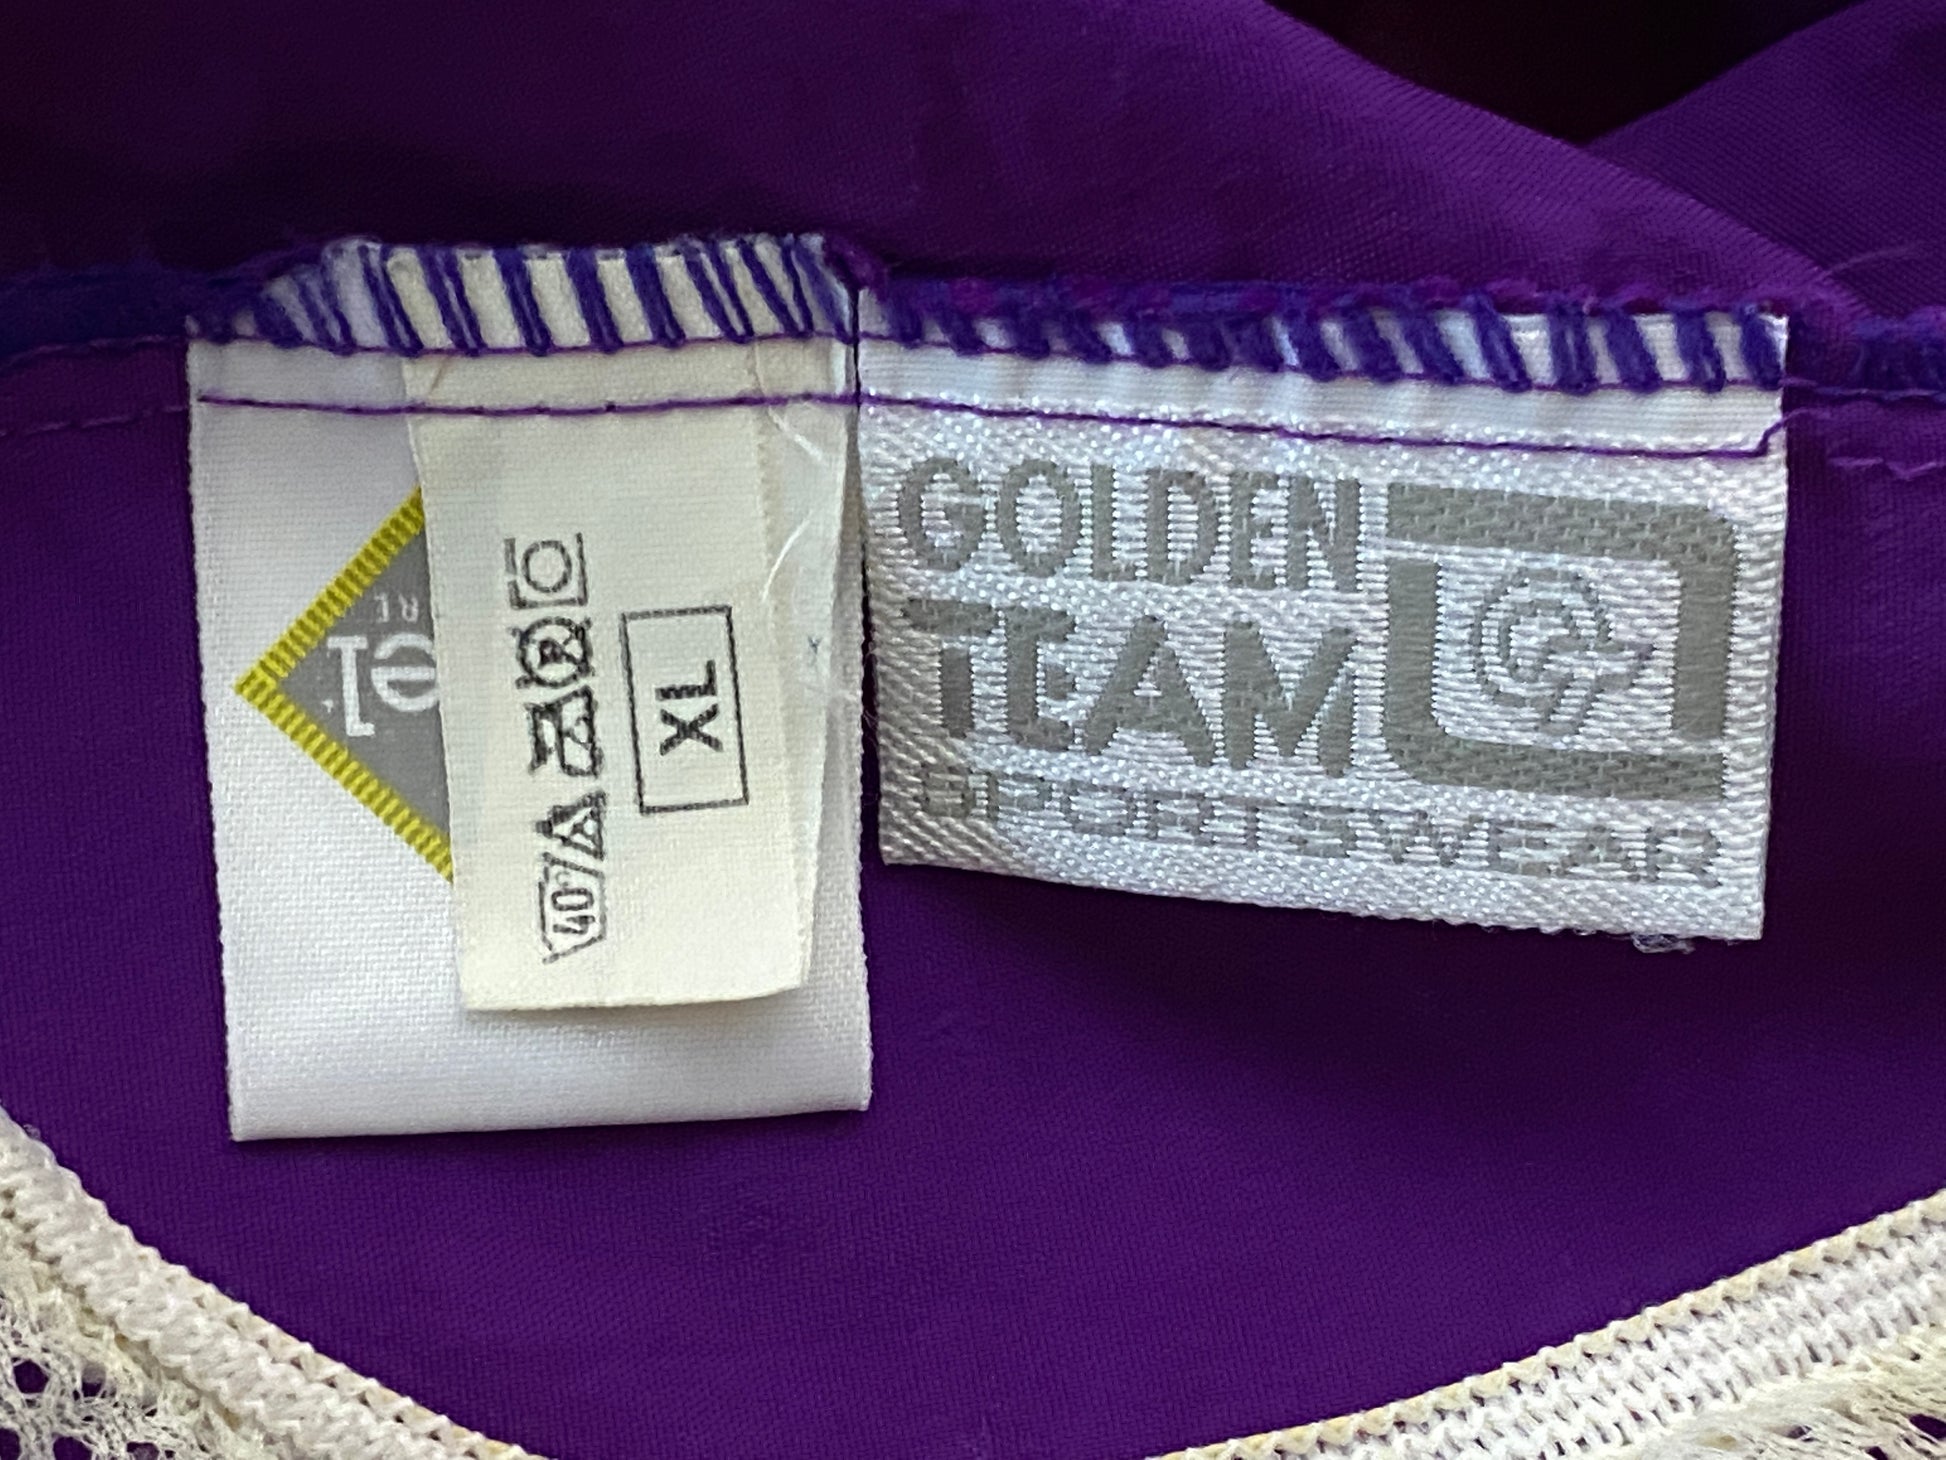 90s Golden Team Vintage Men's Track Shorts - XL Purple Nylon